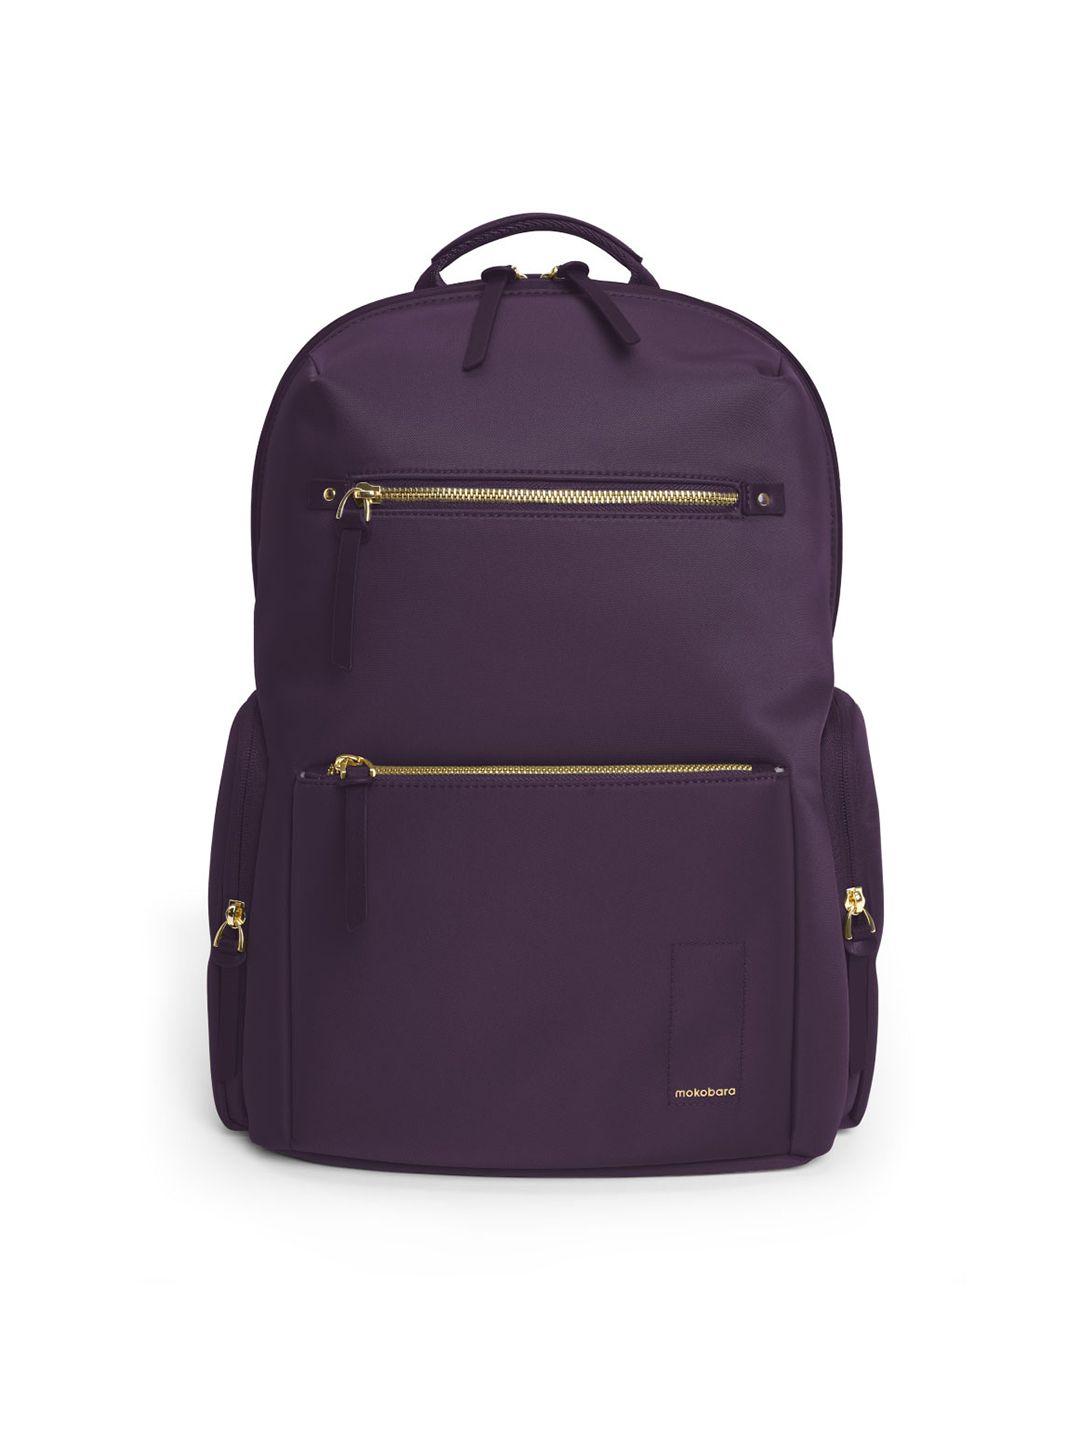 mokobara unisex purple backpack